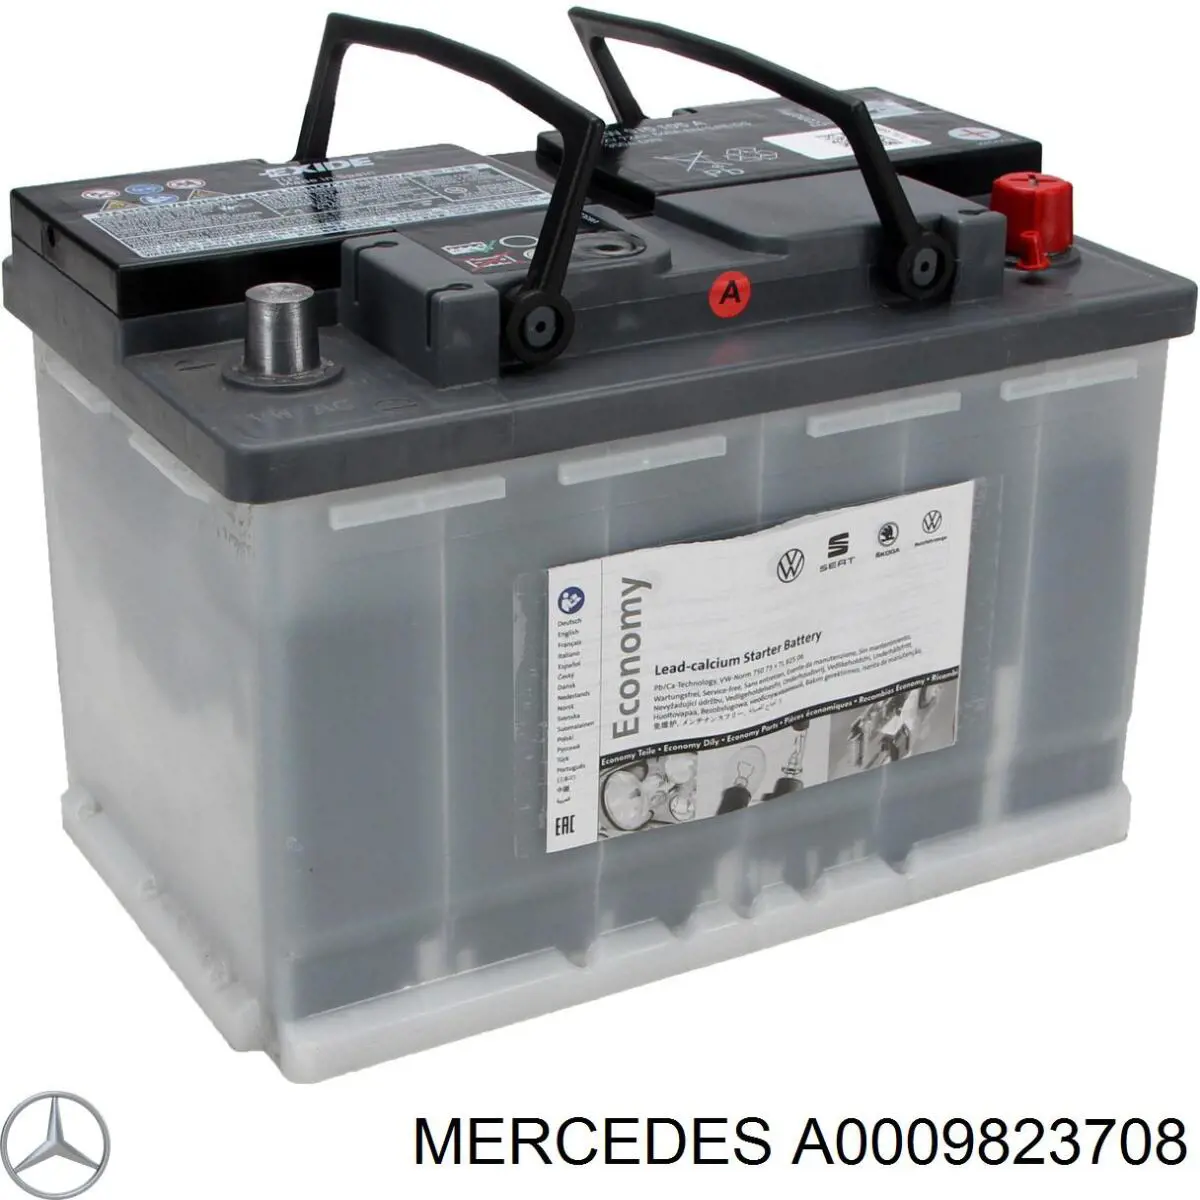 0009823708 Mercedes